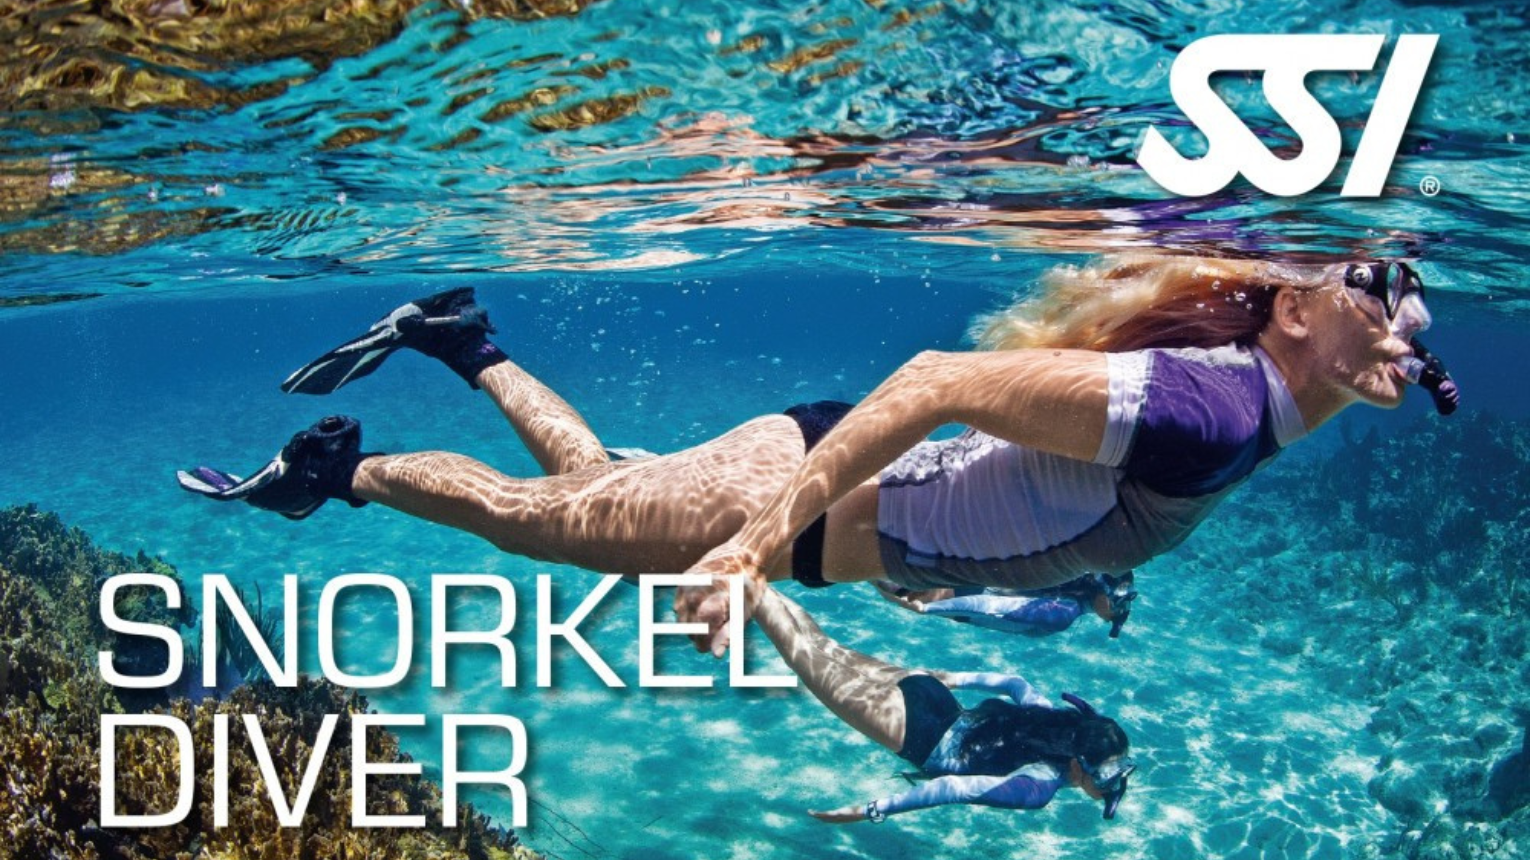 SSI Snorkel Tanfolyam- Snorkel Diver Aquaworldben 1